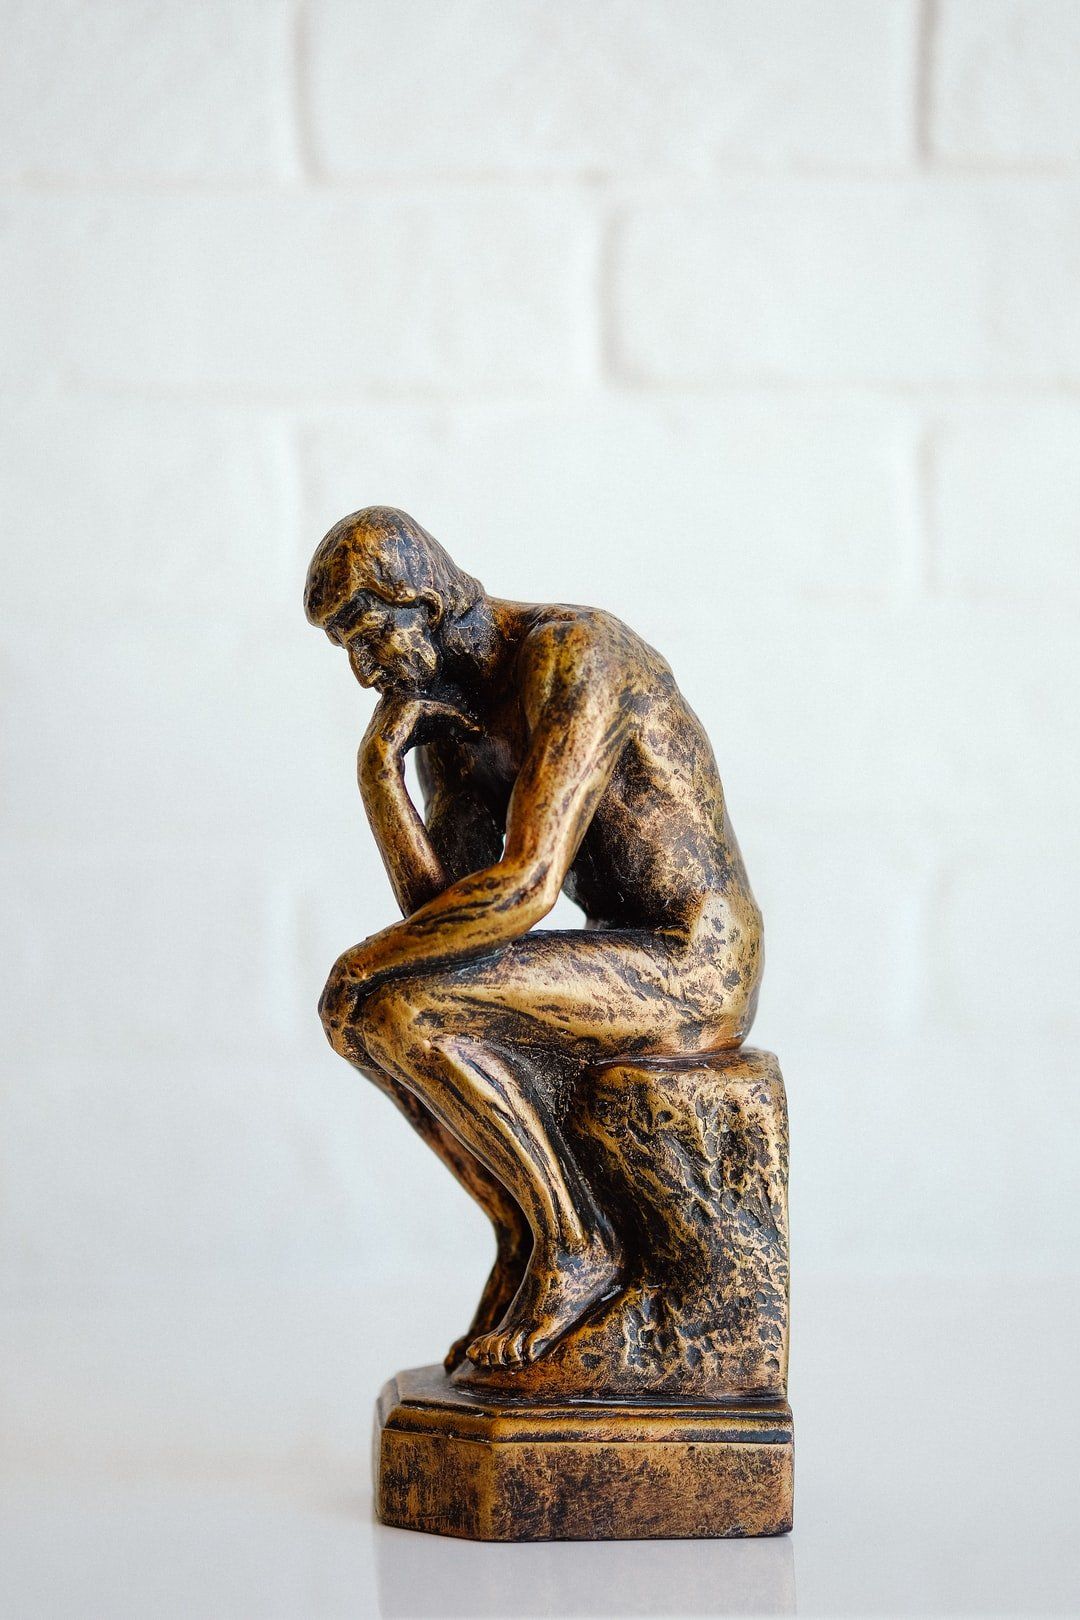 Thinking sculpture